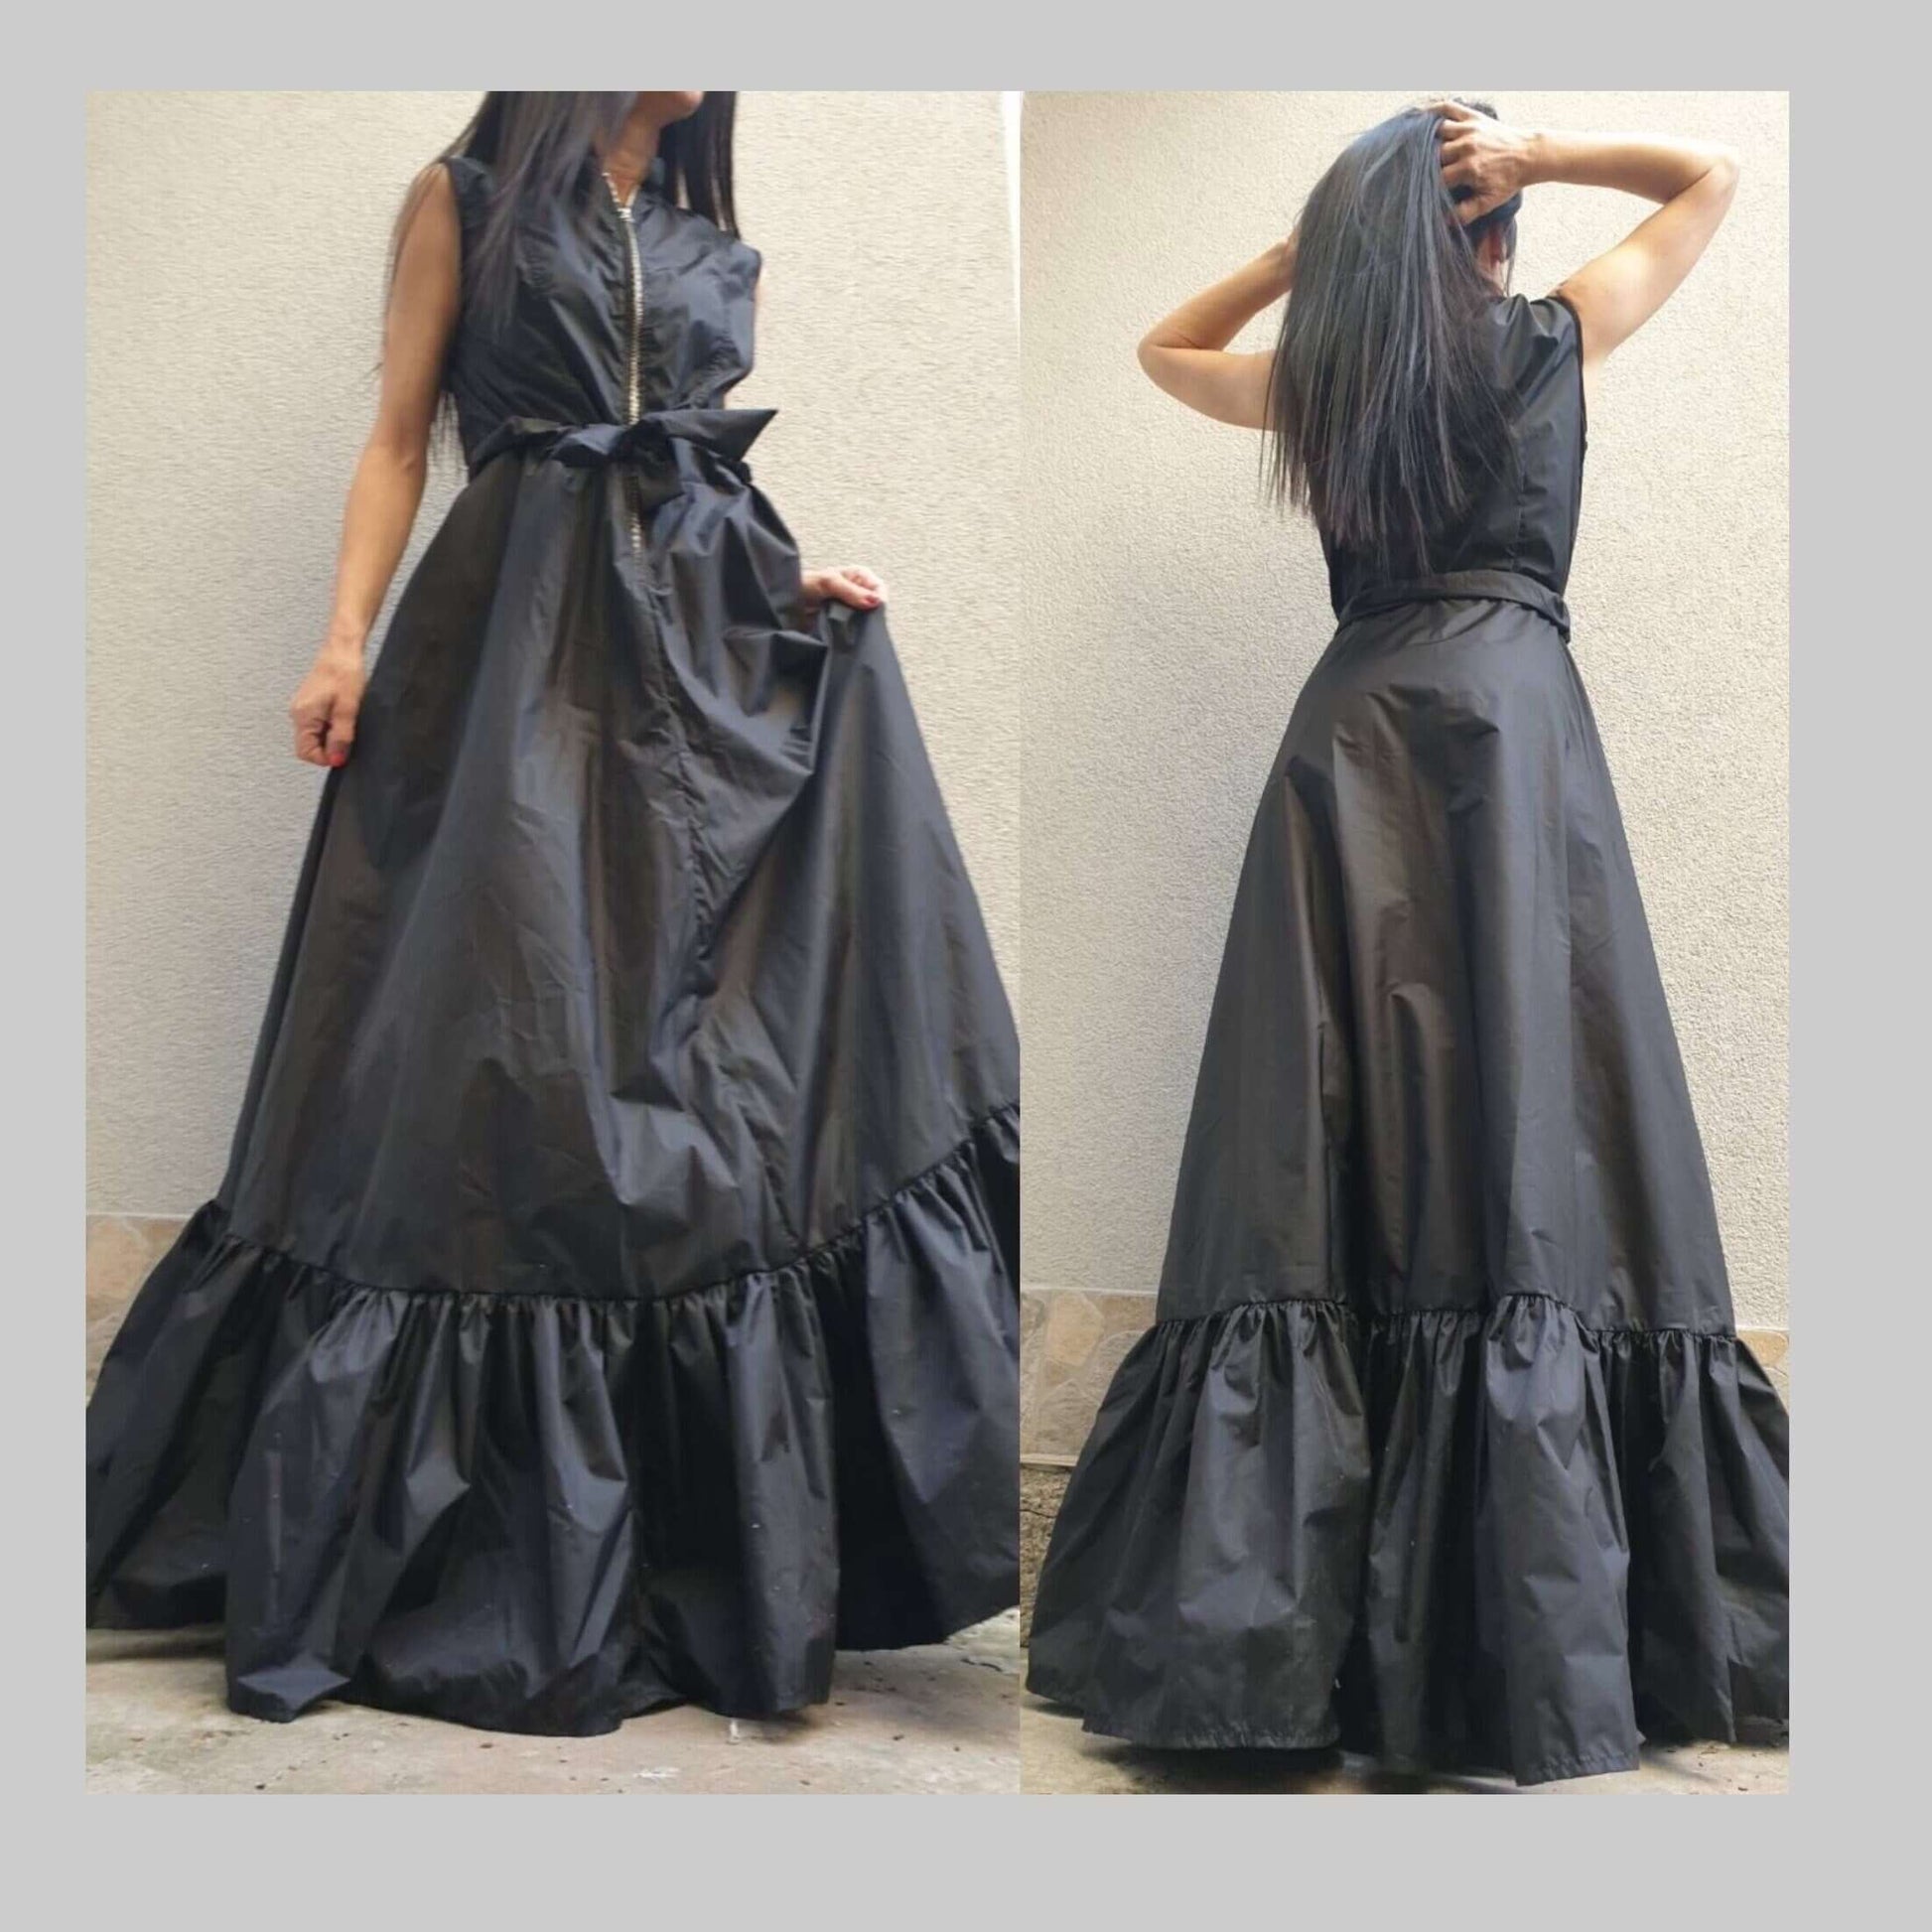 Extravagant Black Dress - Handmade clothing from AngelBySilvia - Top Designer Brands 